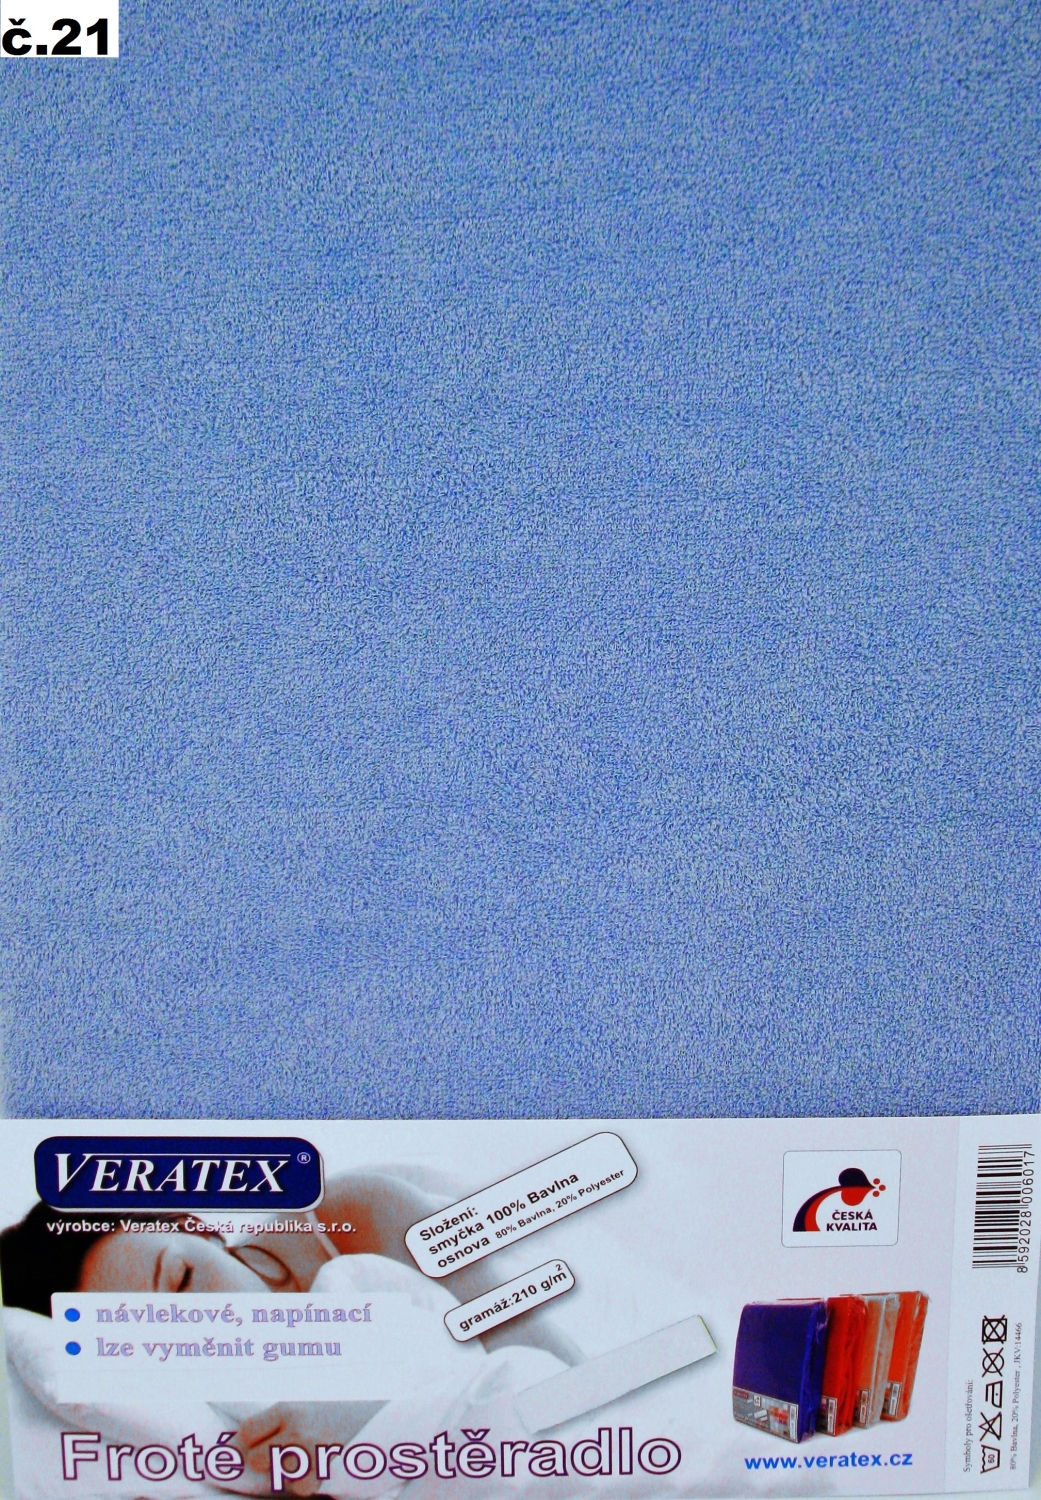 Veratex Froté prostěradlo jednolůžko 90x200/16 cm (č.21-sv.modrá)